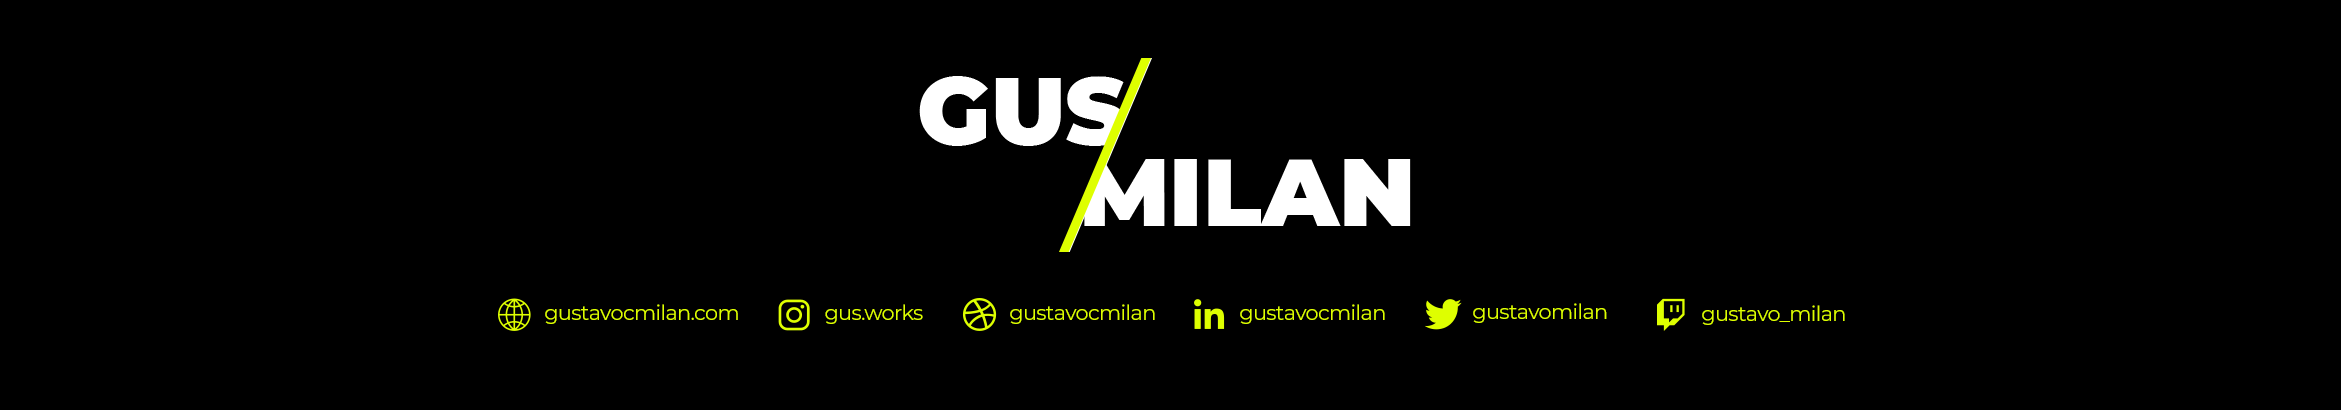 Gustavo da Costa Milan's profile banner